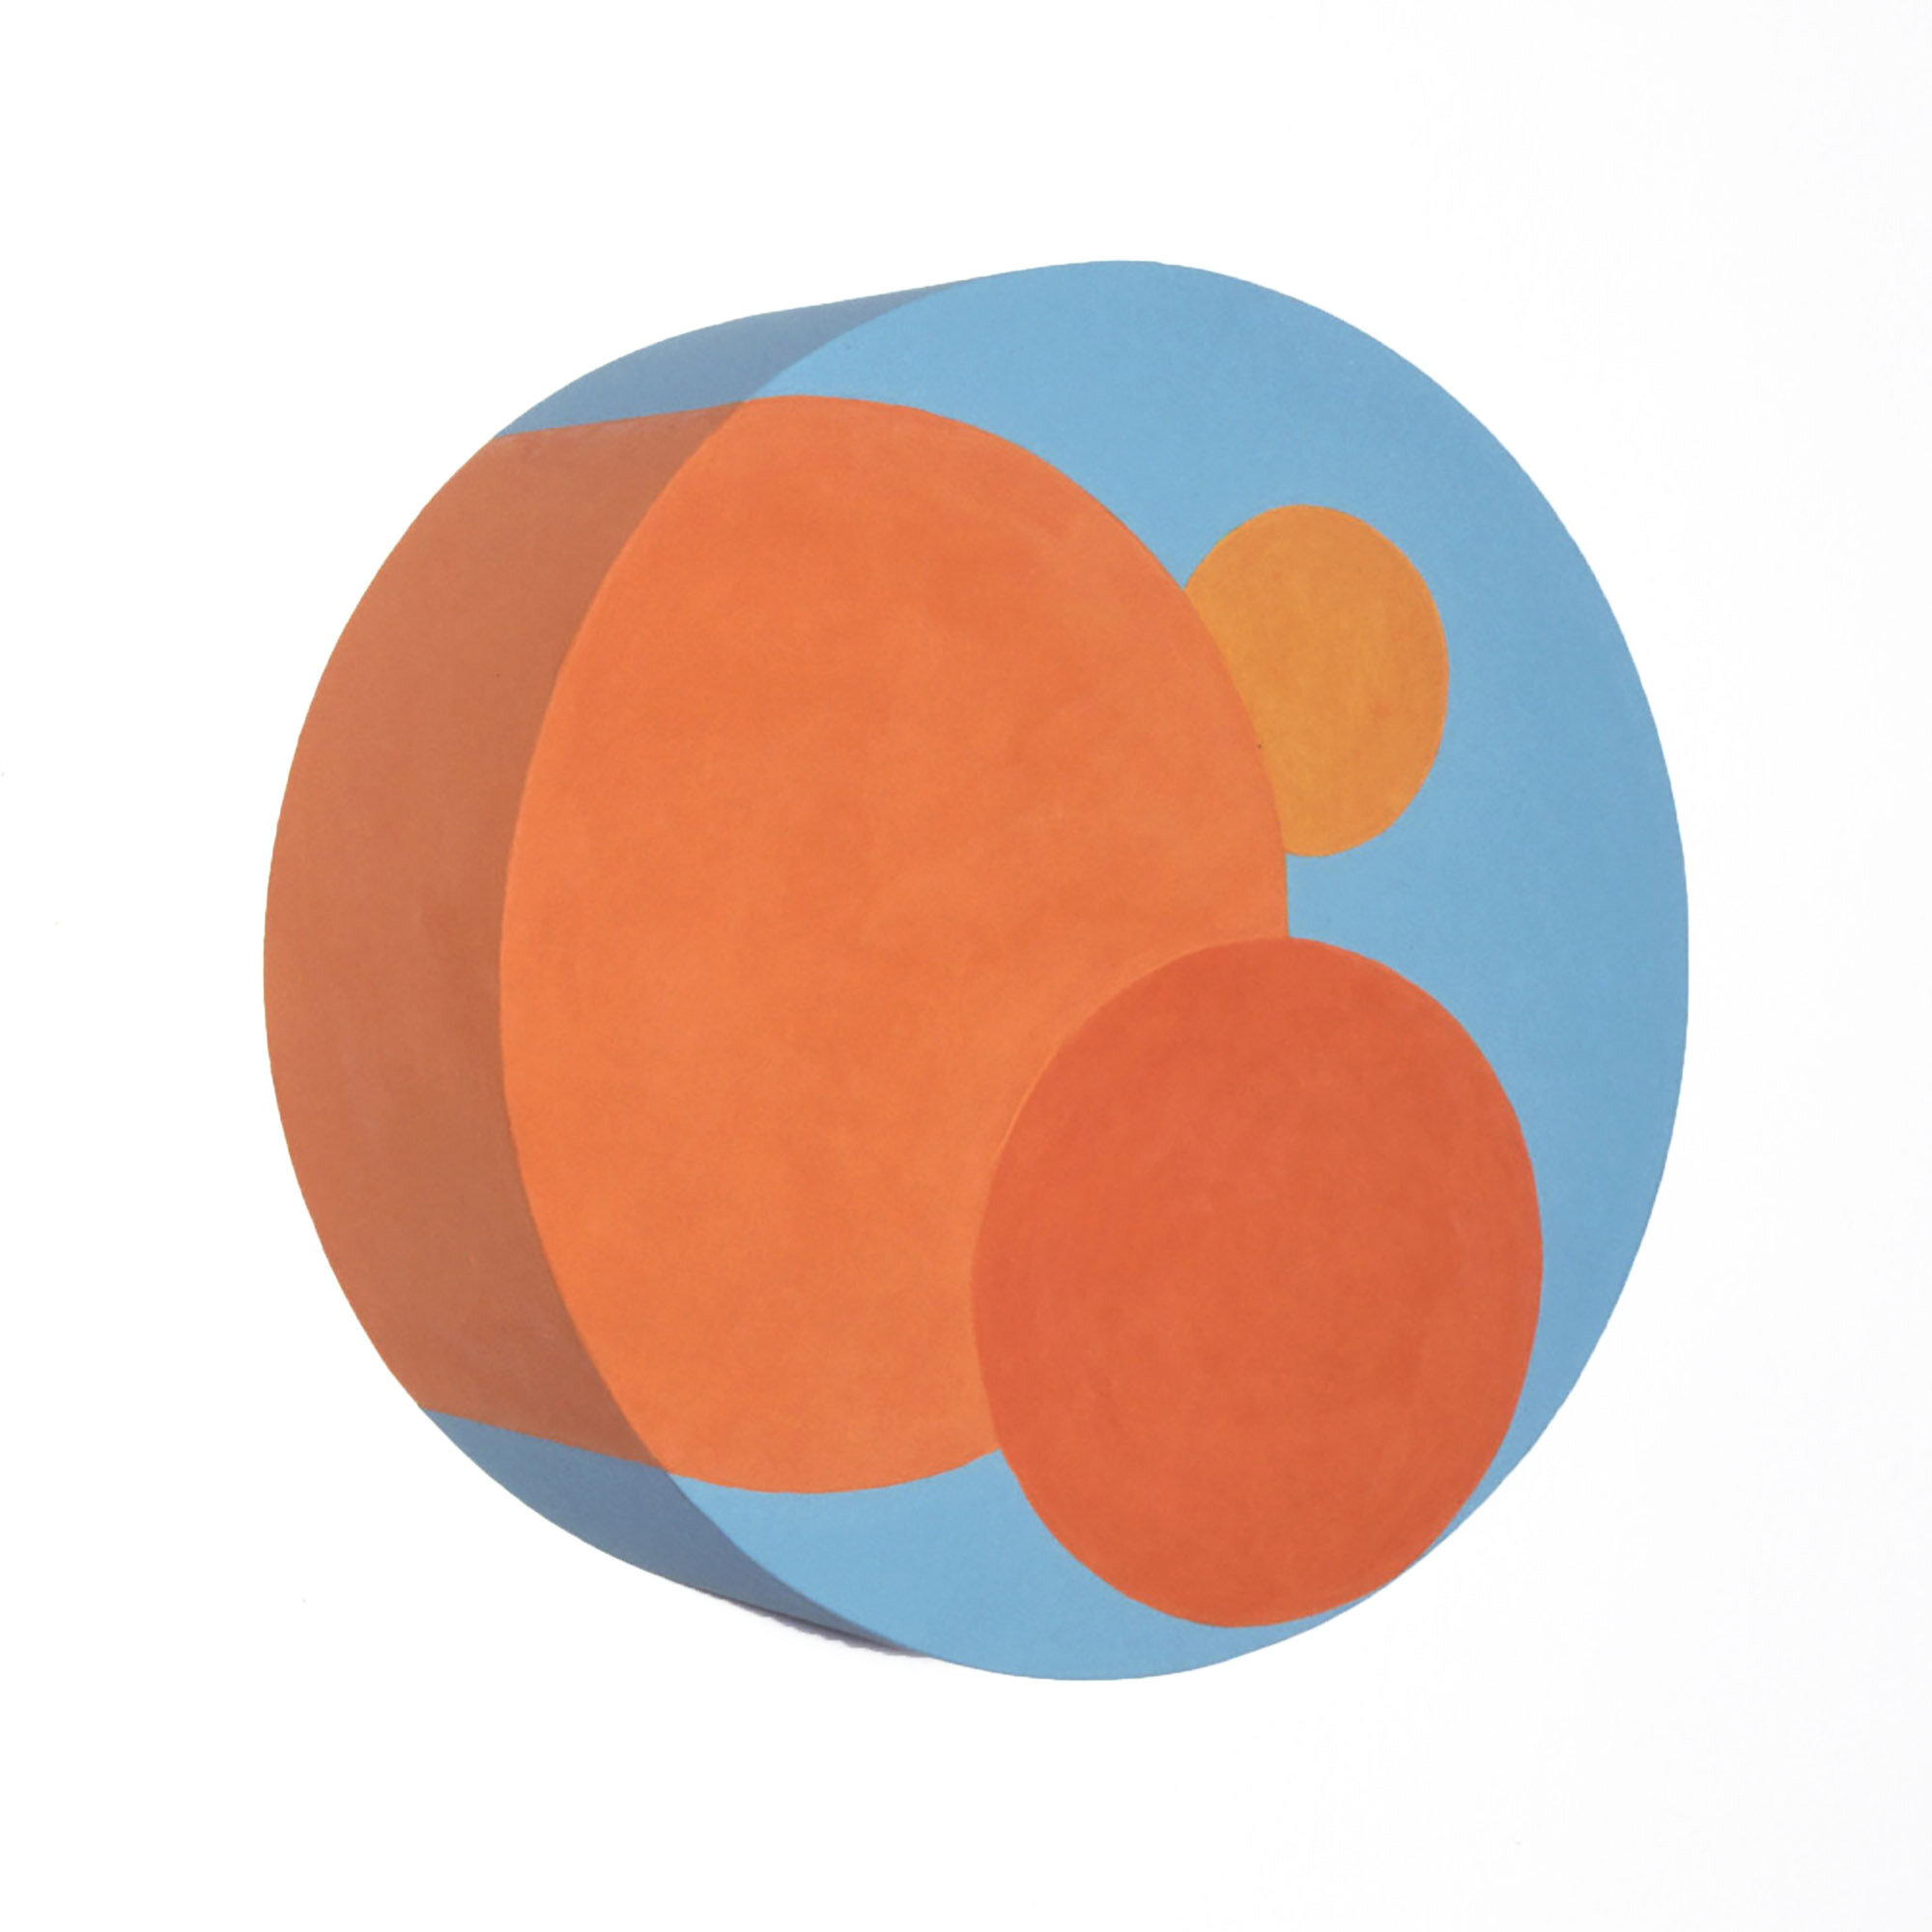 WEB_Abi-Alice-_-Colour-Form-Ratio-Painting.-Round-Orange-Dot-2000x2000px-RGB-300DPI.jpg